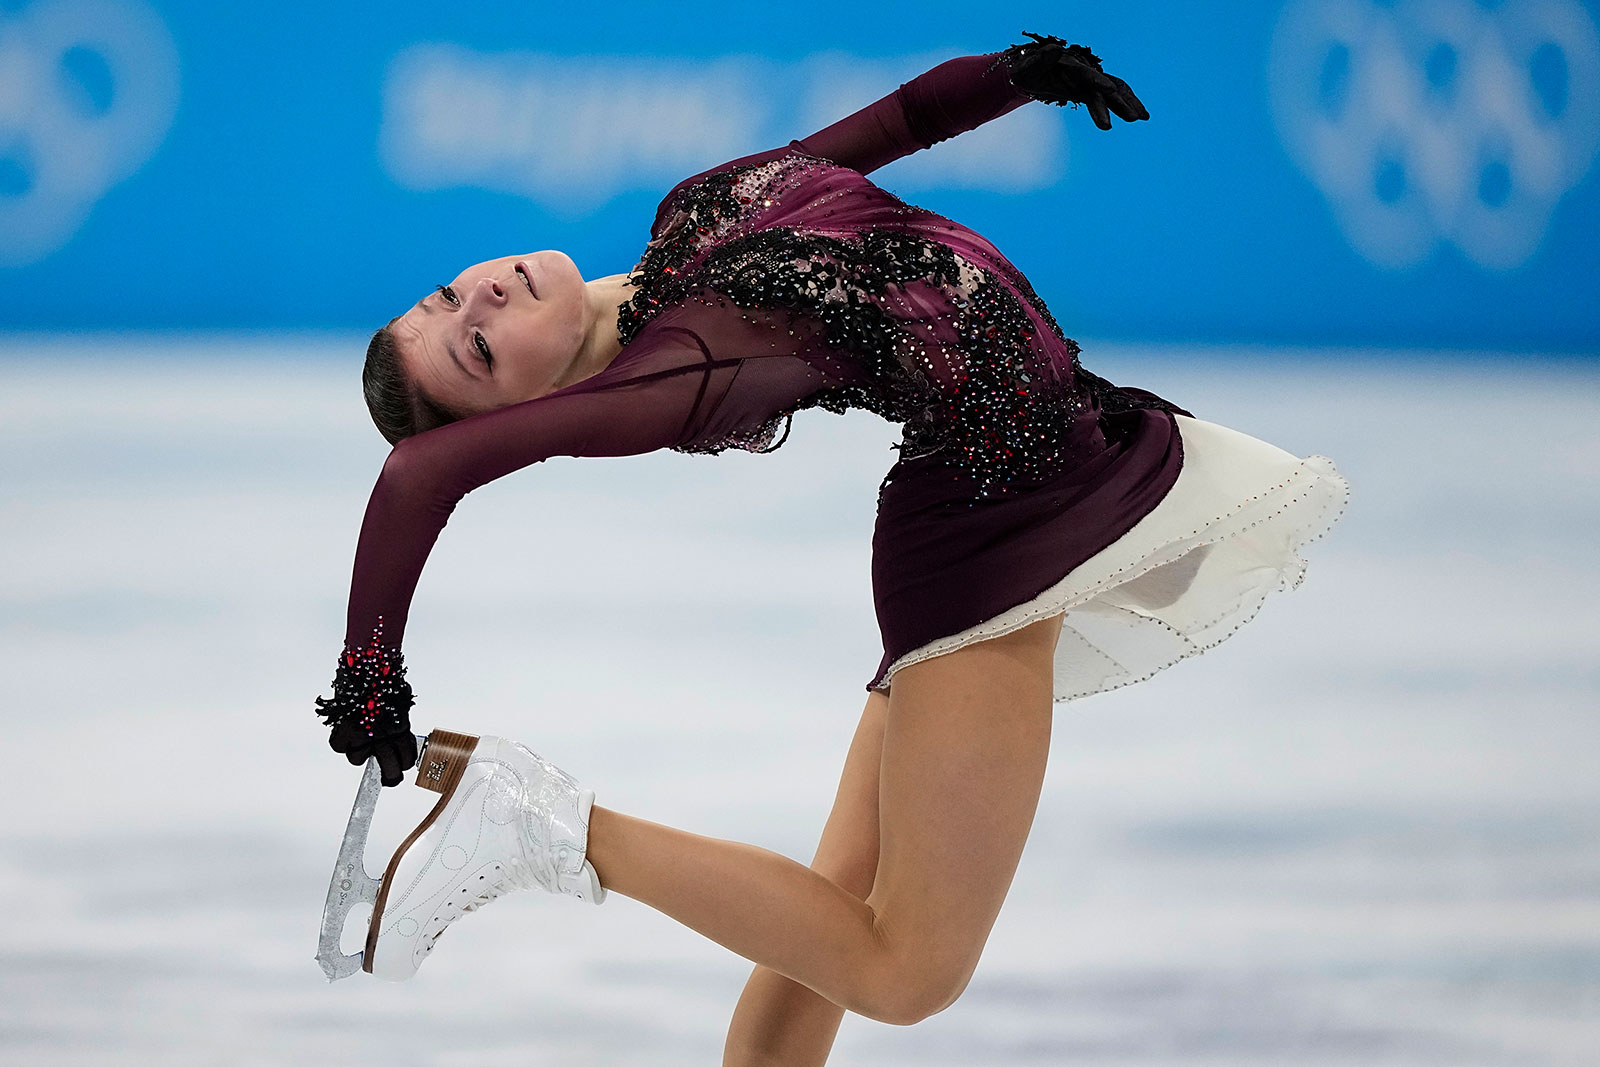 Anna Shcherbakova competes in the women's free skate on February 17.